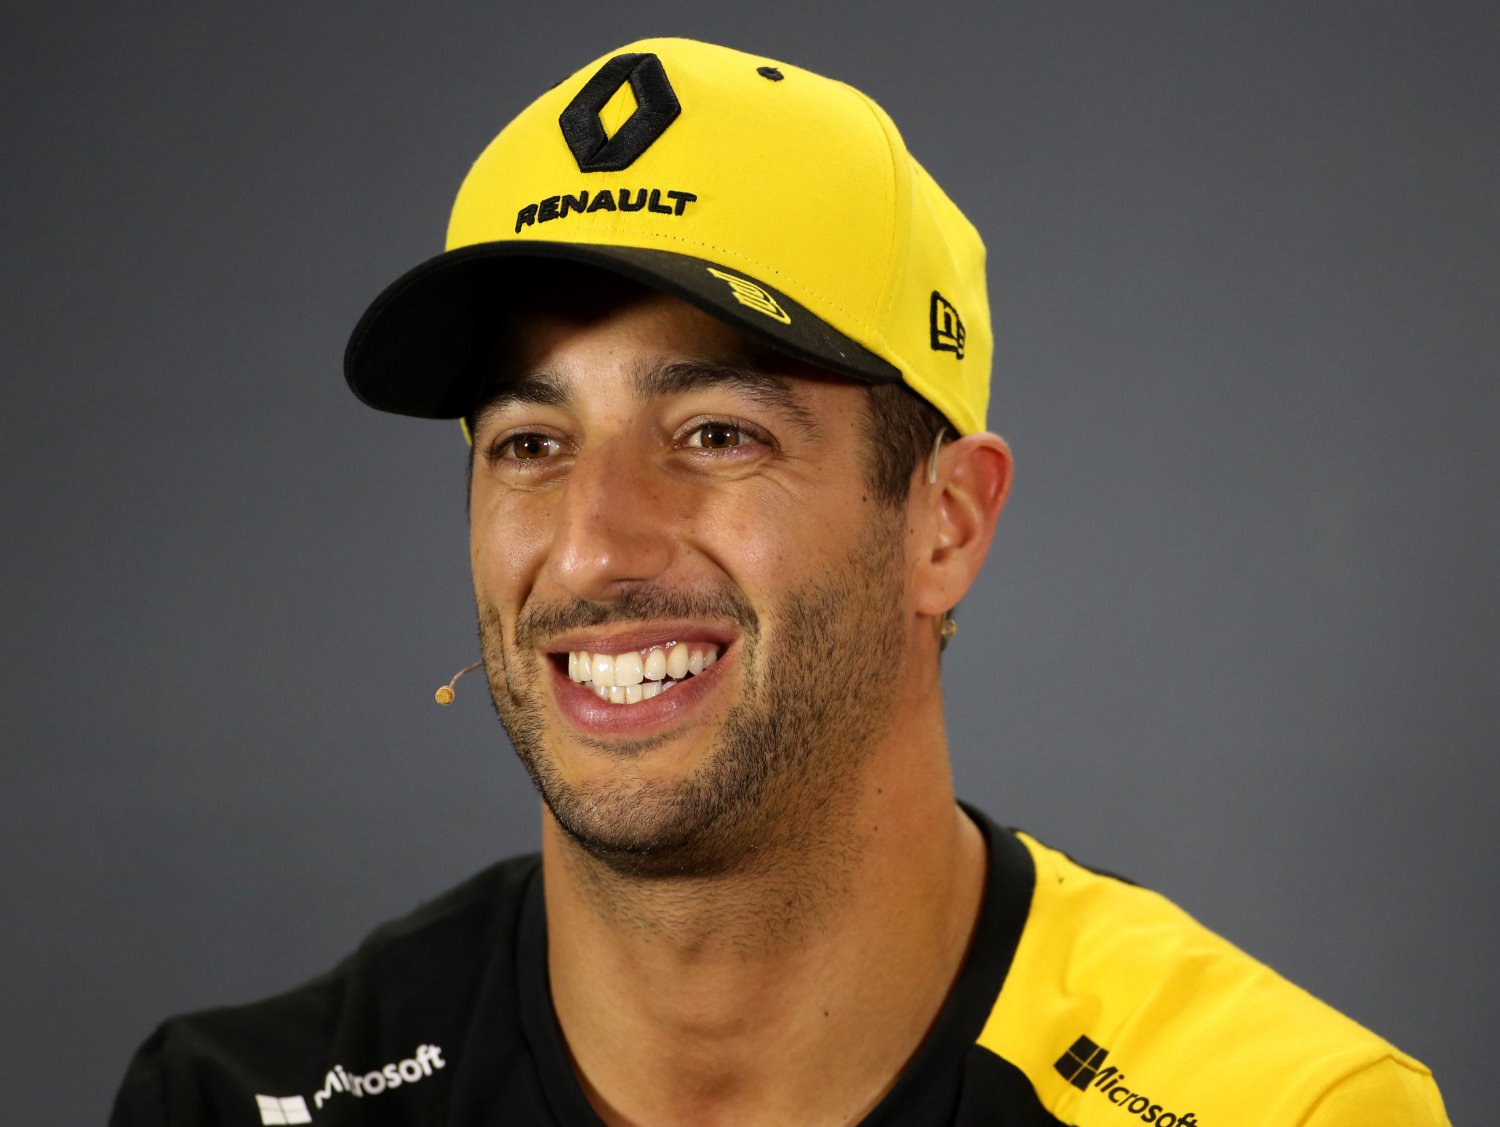 Italian Daniel Ricciardo not sure why Italian team overlooked him